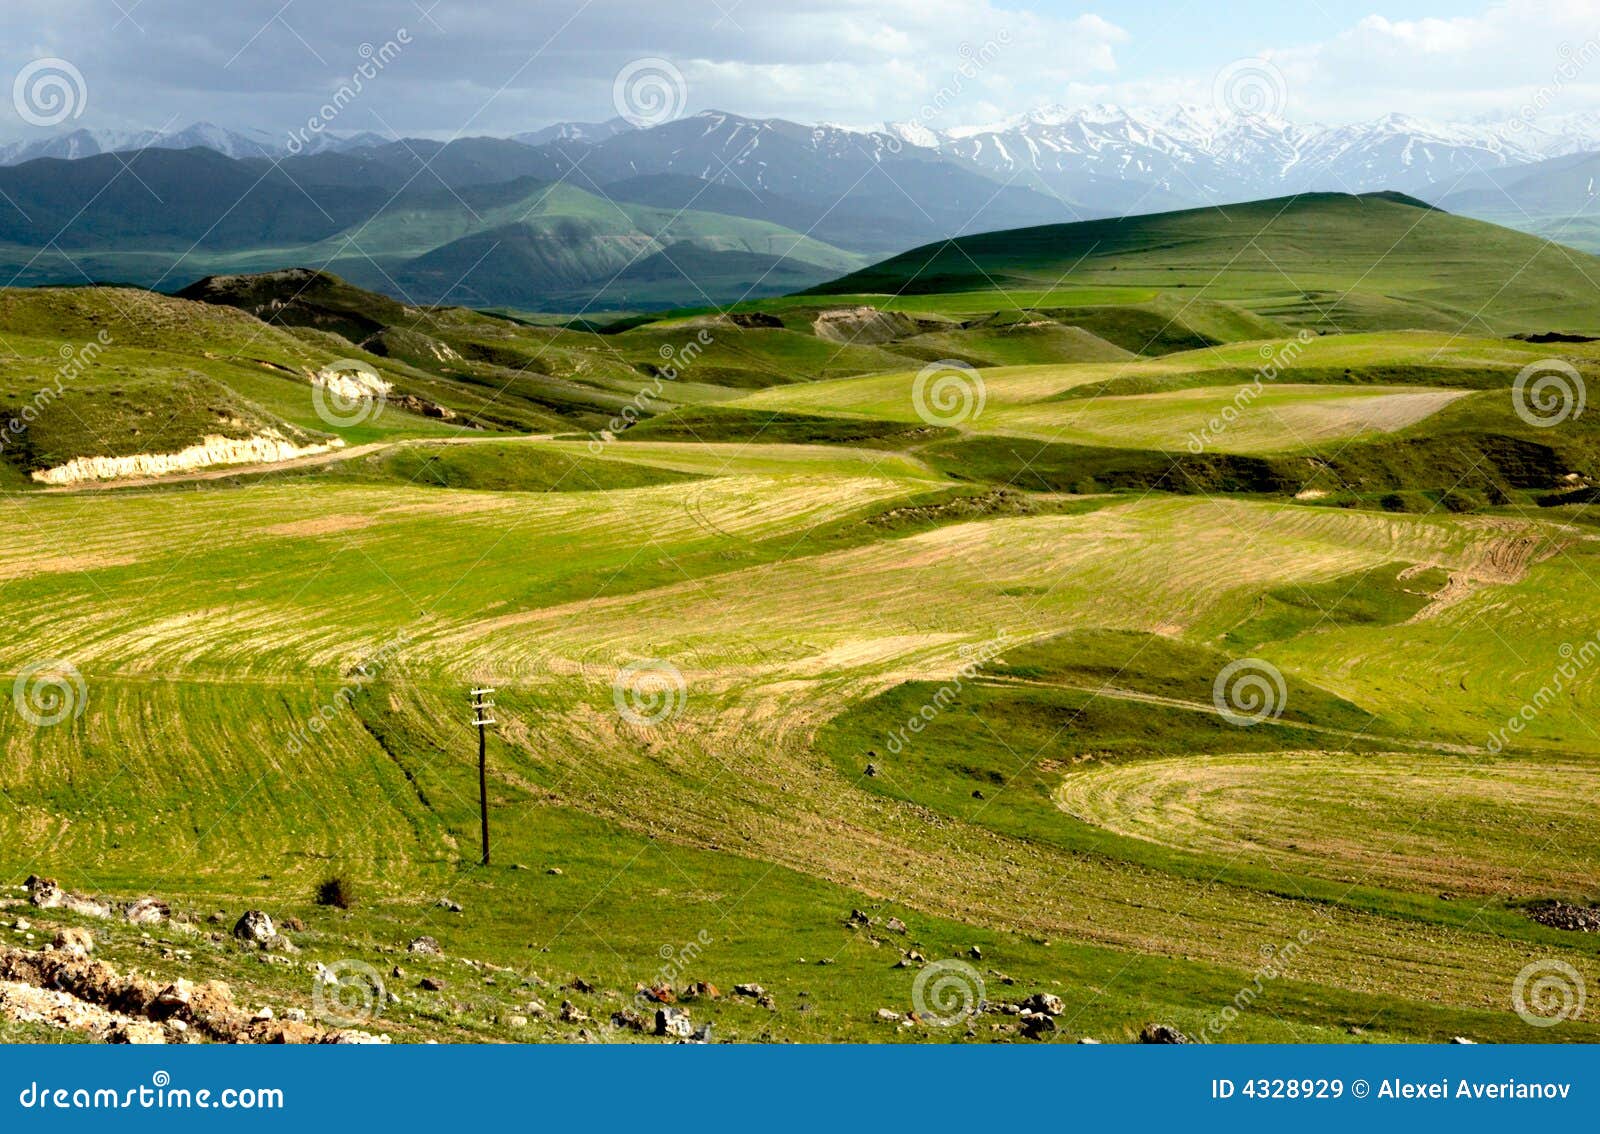 agricultural tourism armenia